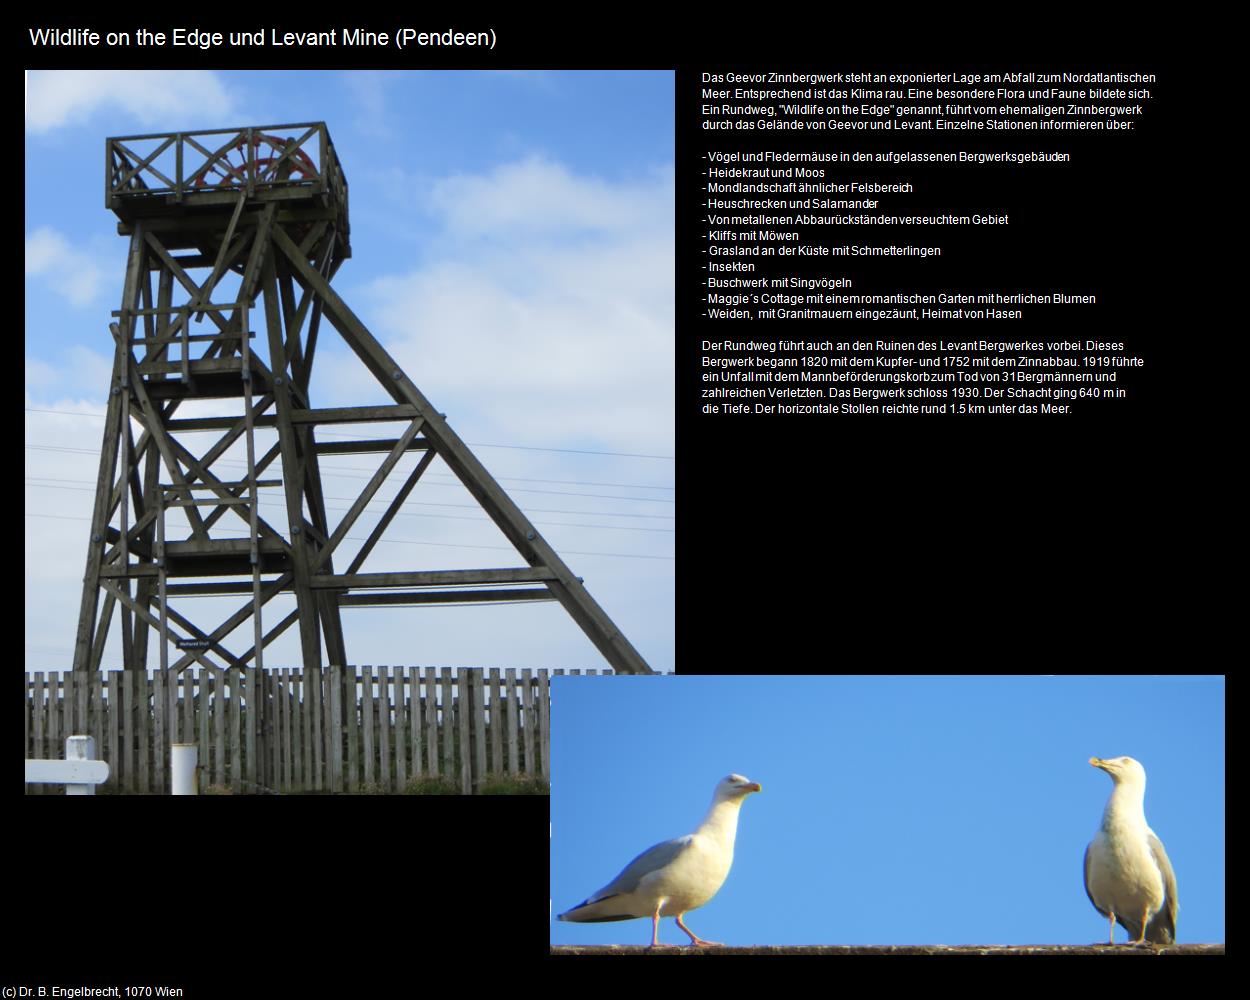 Wildlife on the Edge und Levant Mine (Pendeen, England ) in Kulturatlas-ENGLAND und WALES